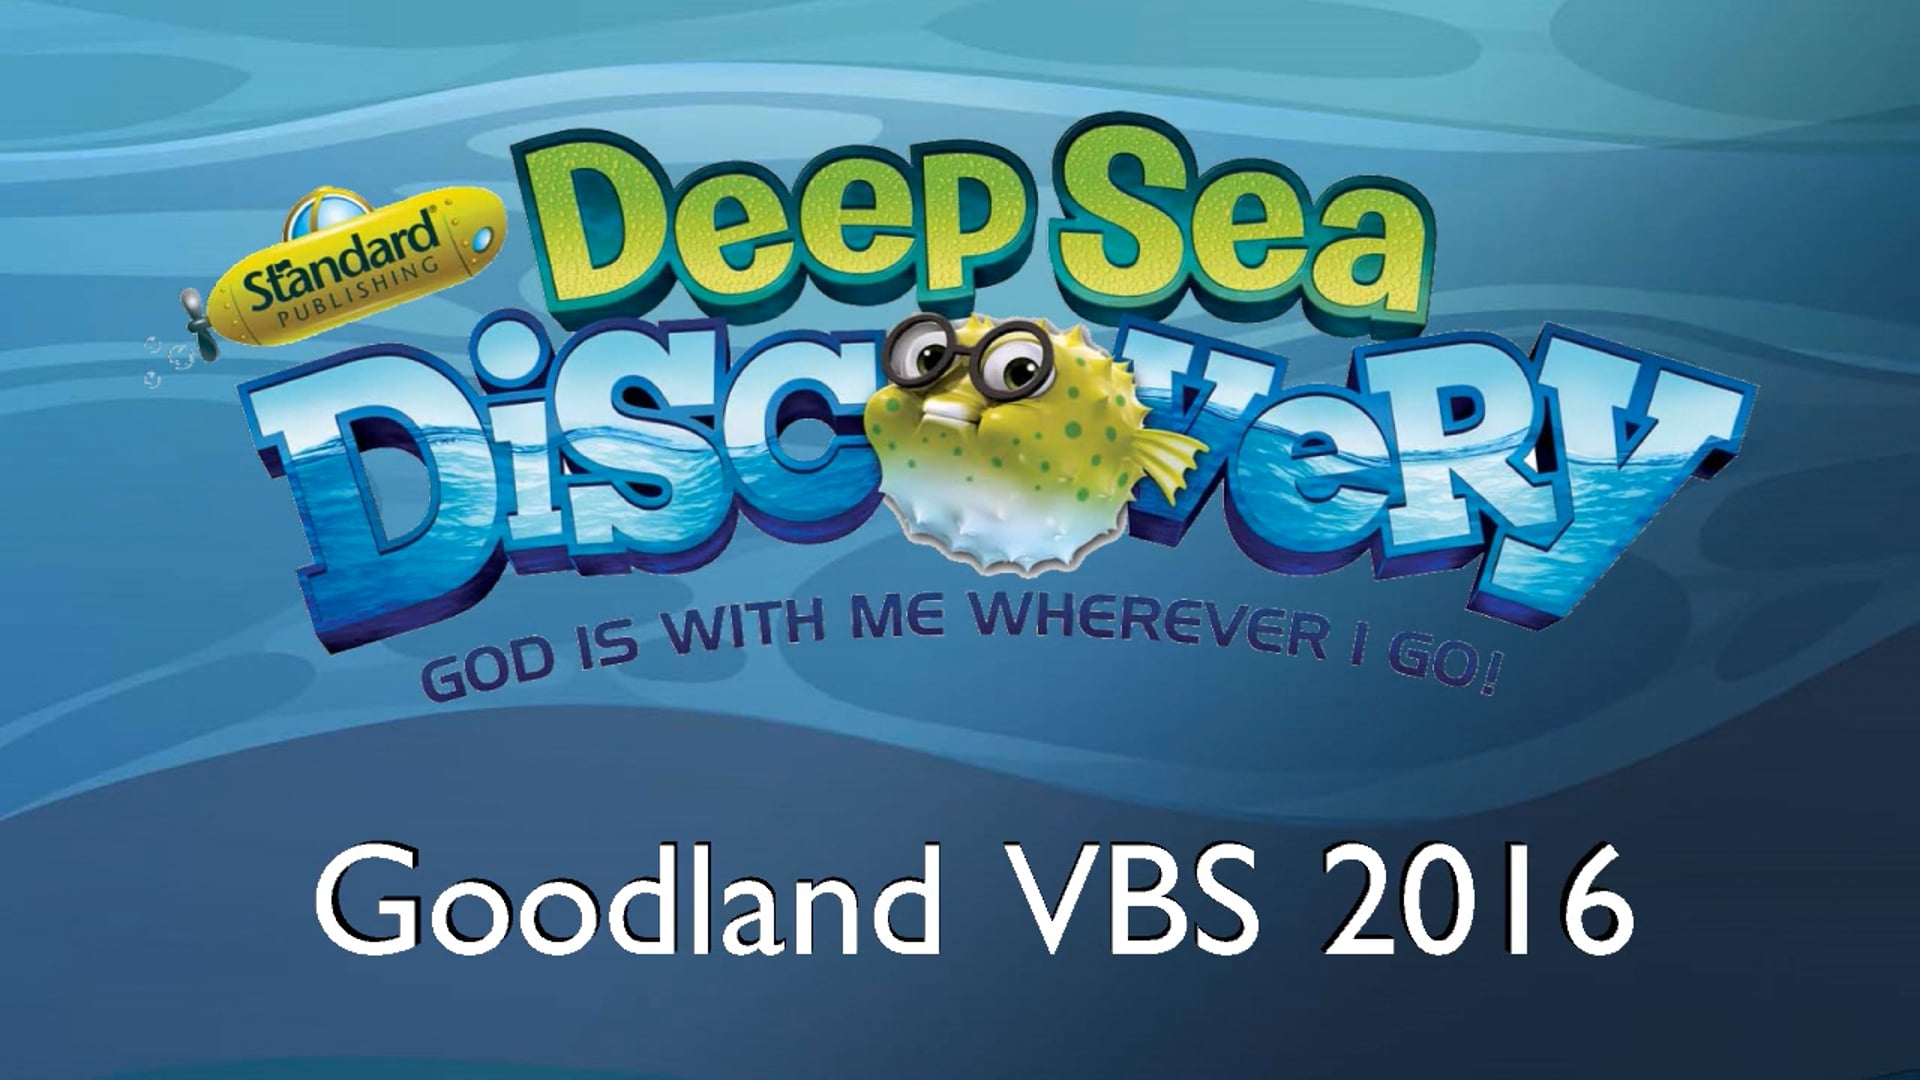 2016 Goodland VBS (Deep Sea Discovery)